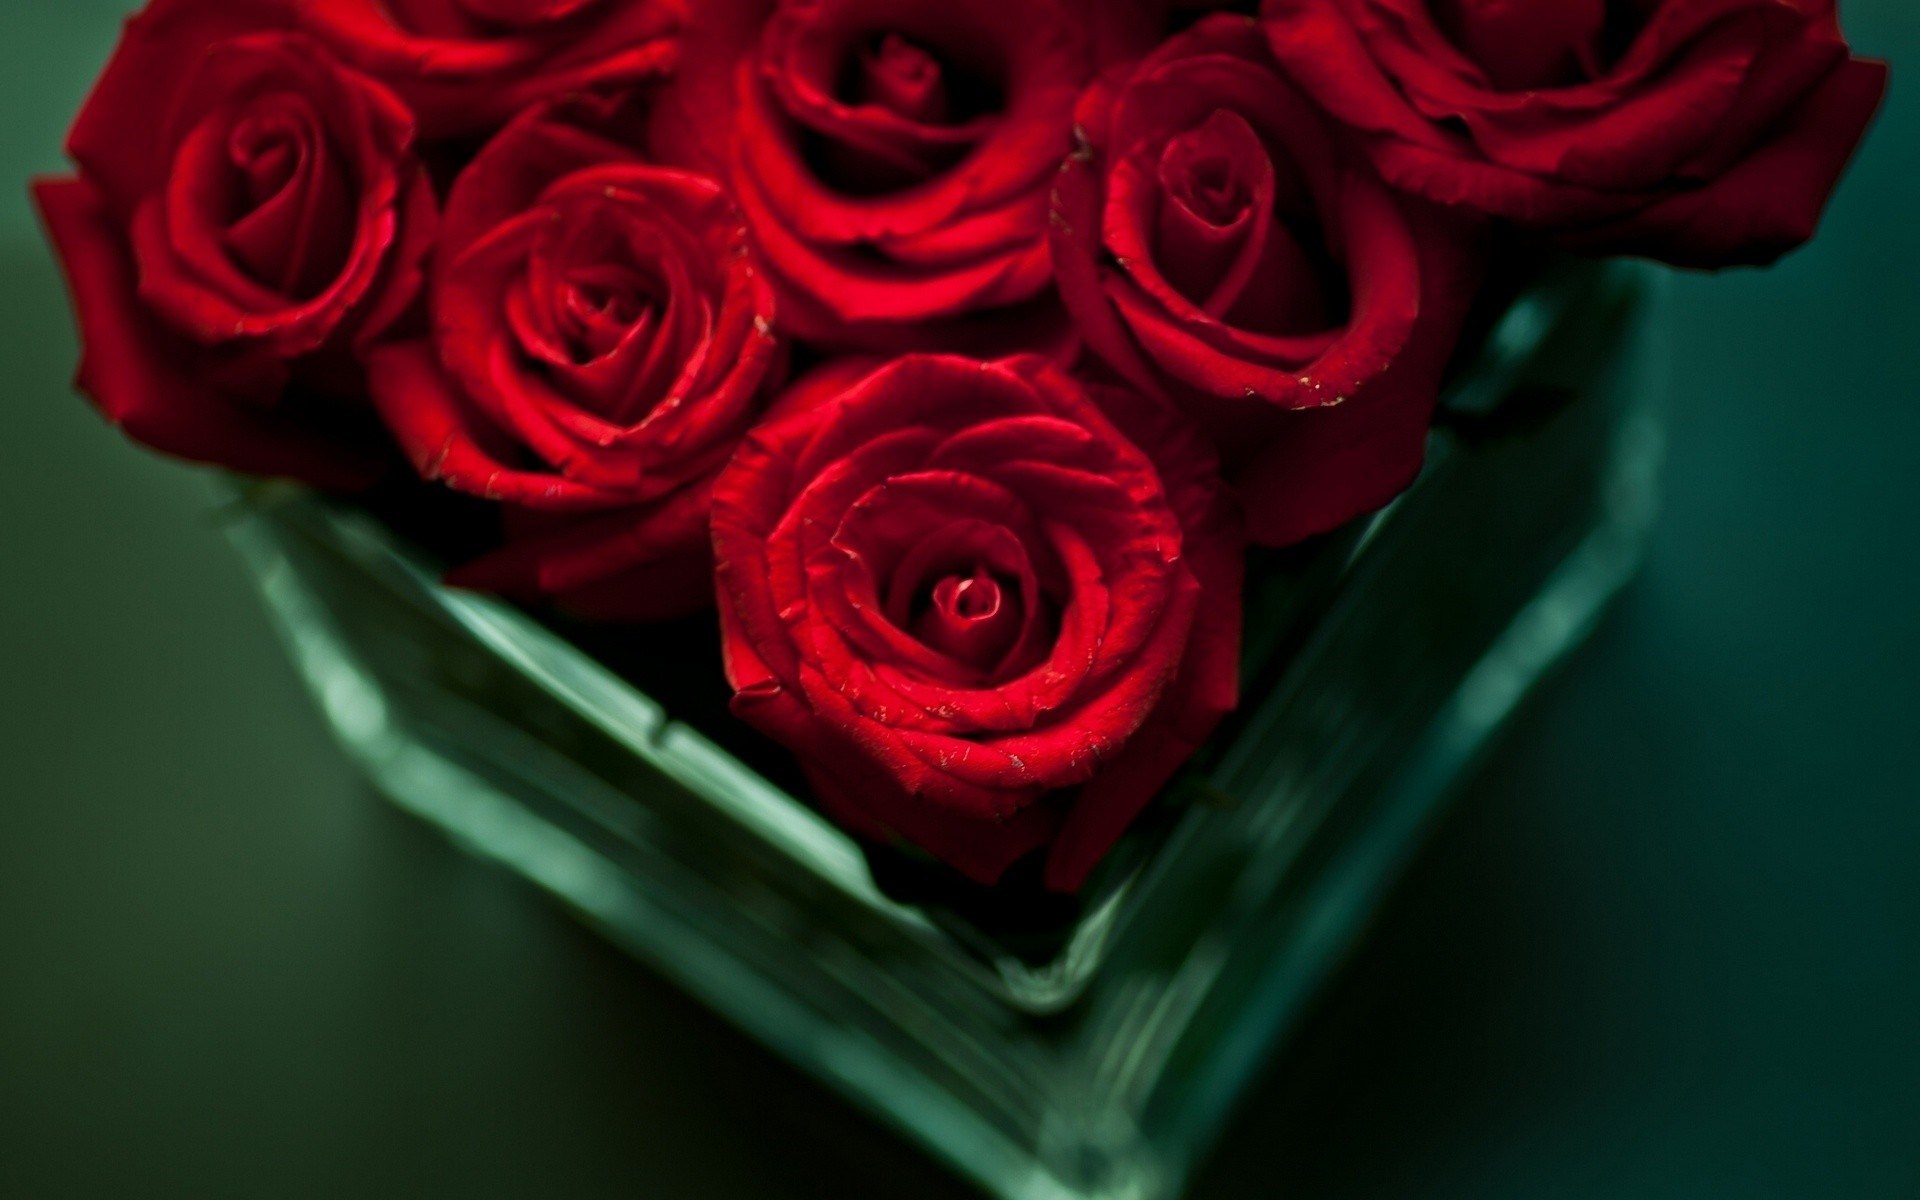 rosa roja live wallpaper descarga gratuita,flor,rosa,rosas de jardín,planta floreciendo,rojo